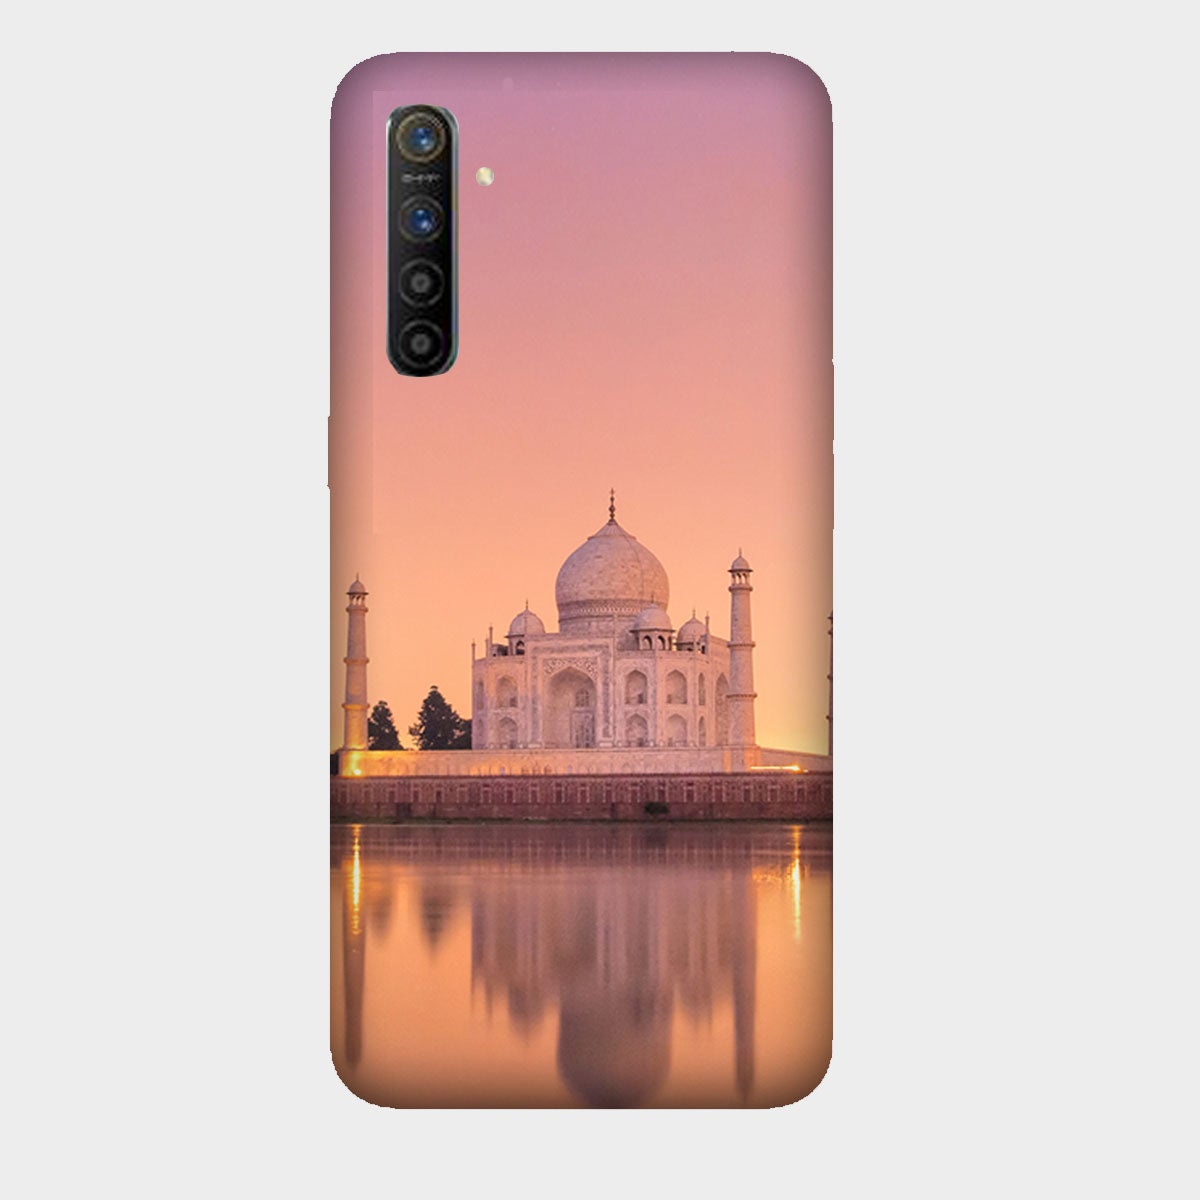 Taj Mahal - Agra - India - Mobile Phone Cover - Hard Case